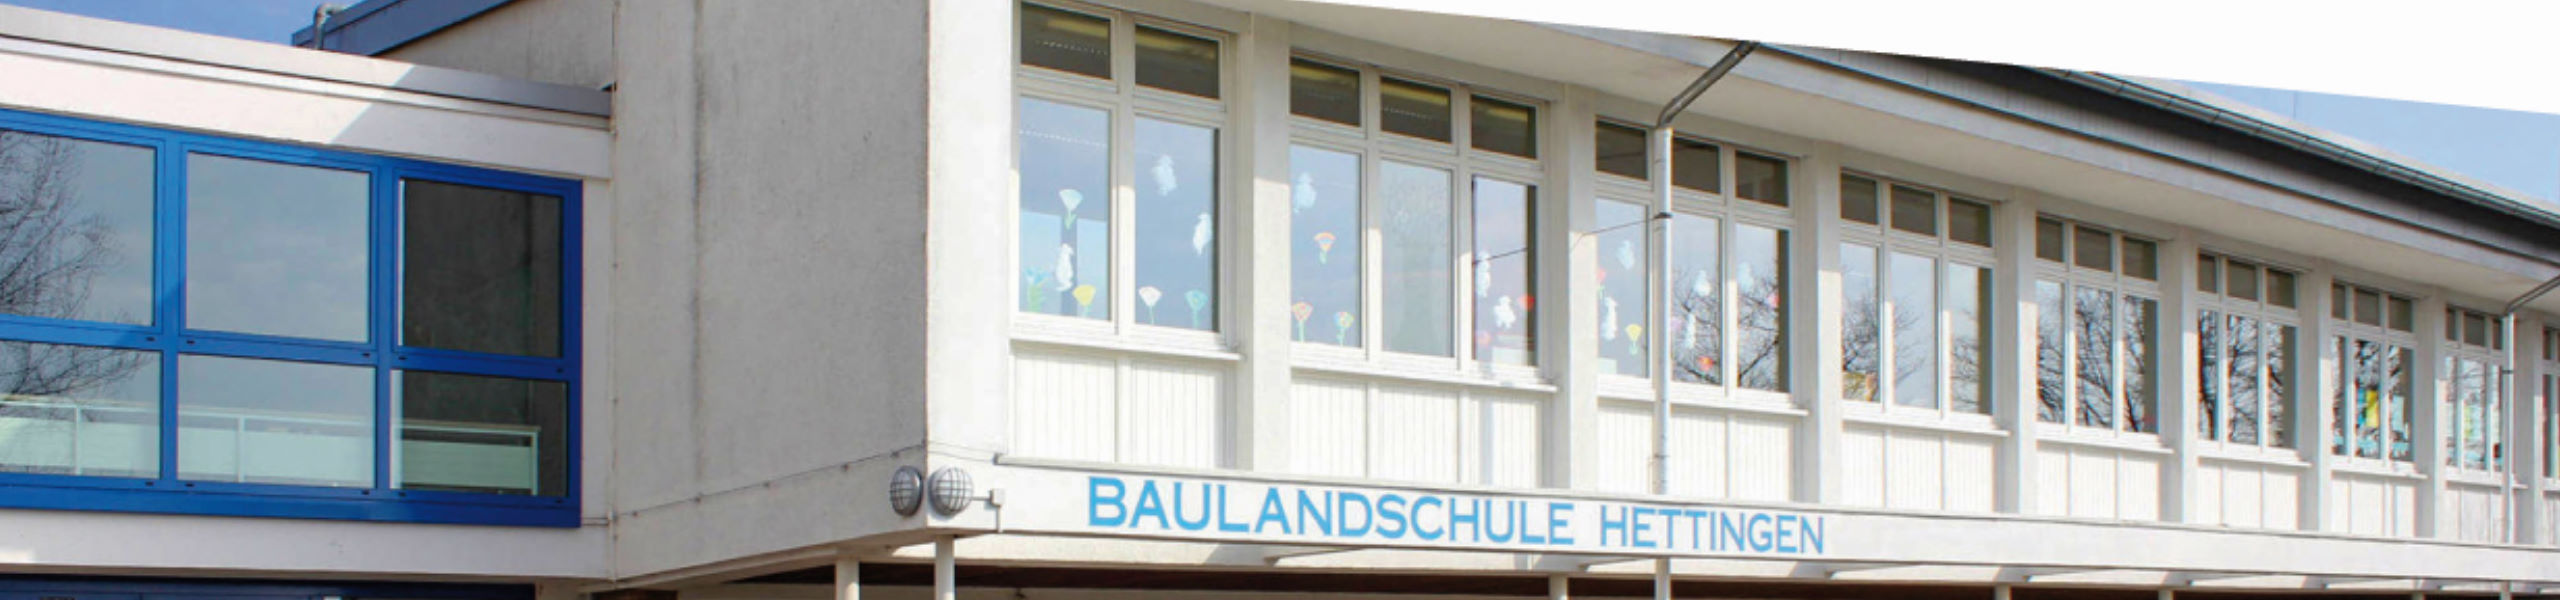 Baulandschule Hettingen - Aktuelles